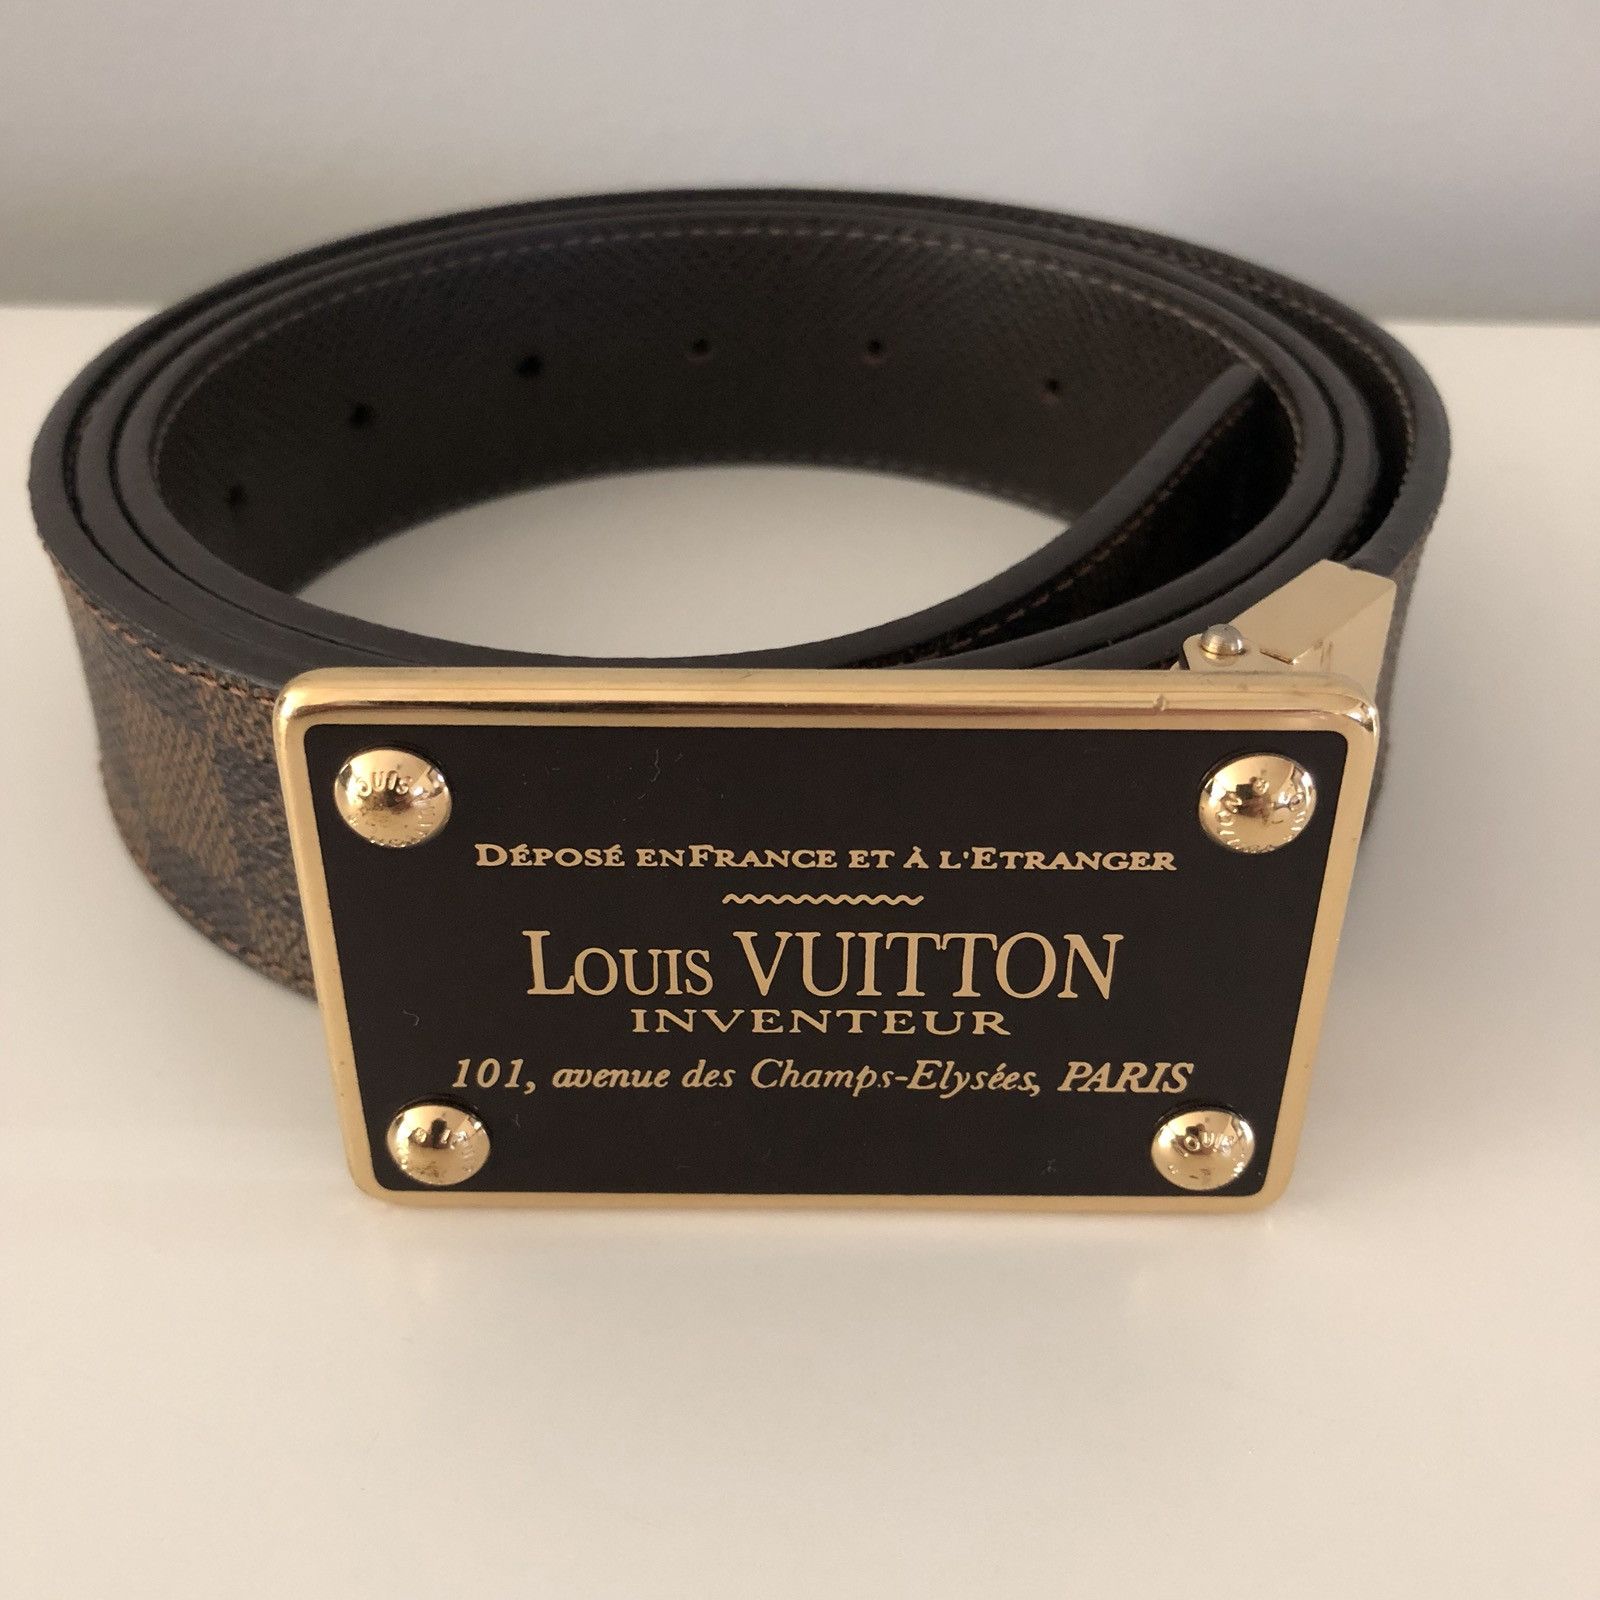 Louis Vuitton 2018 Pyramid Belt - Black Belts, Accessories